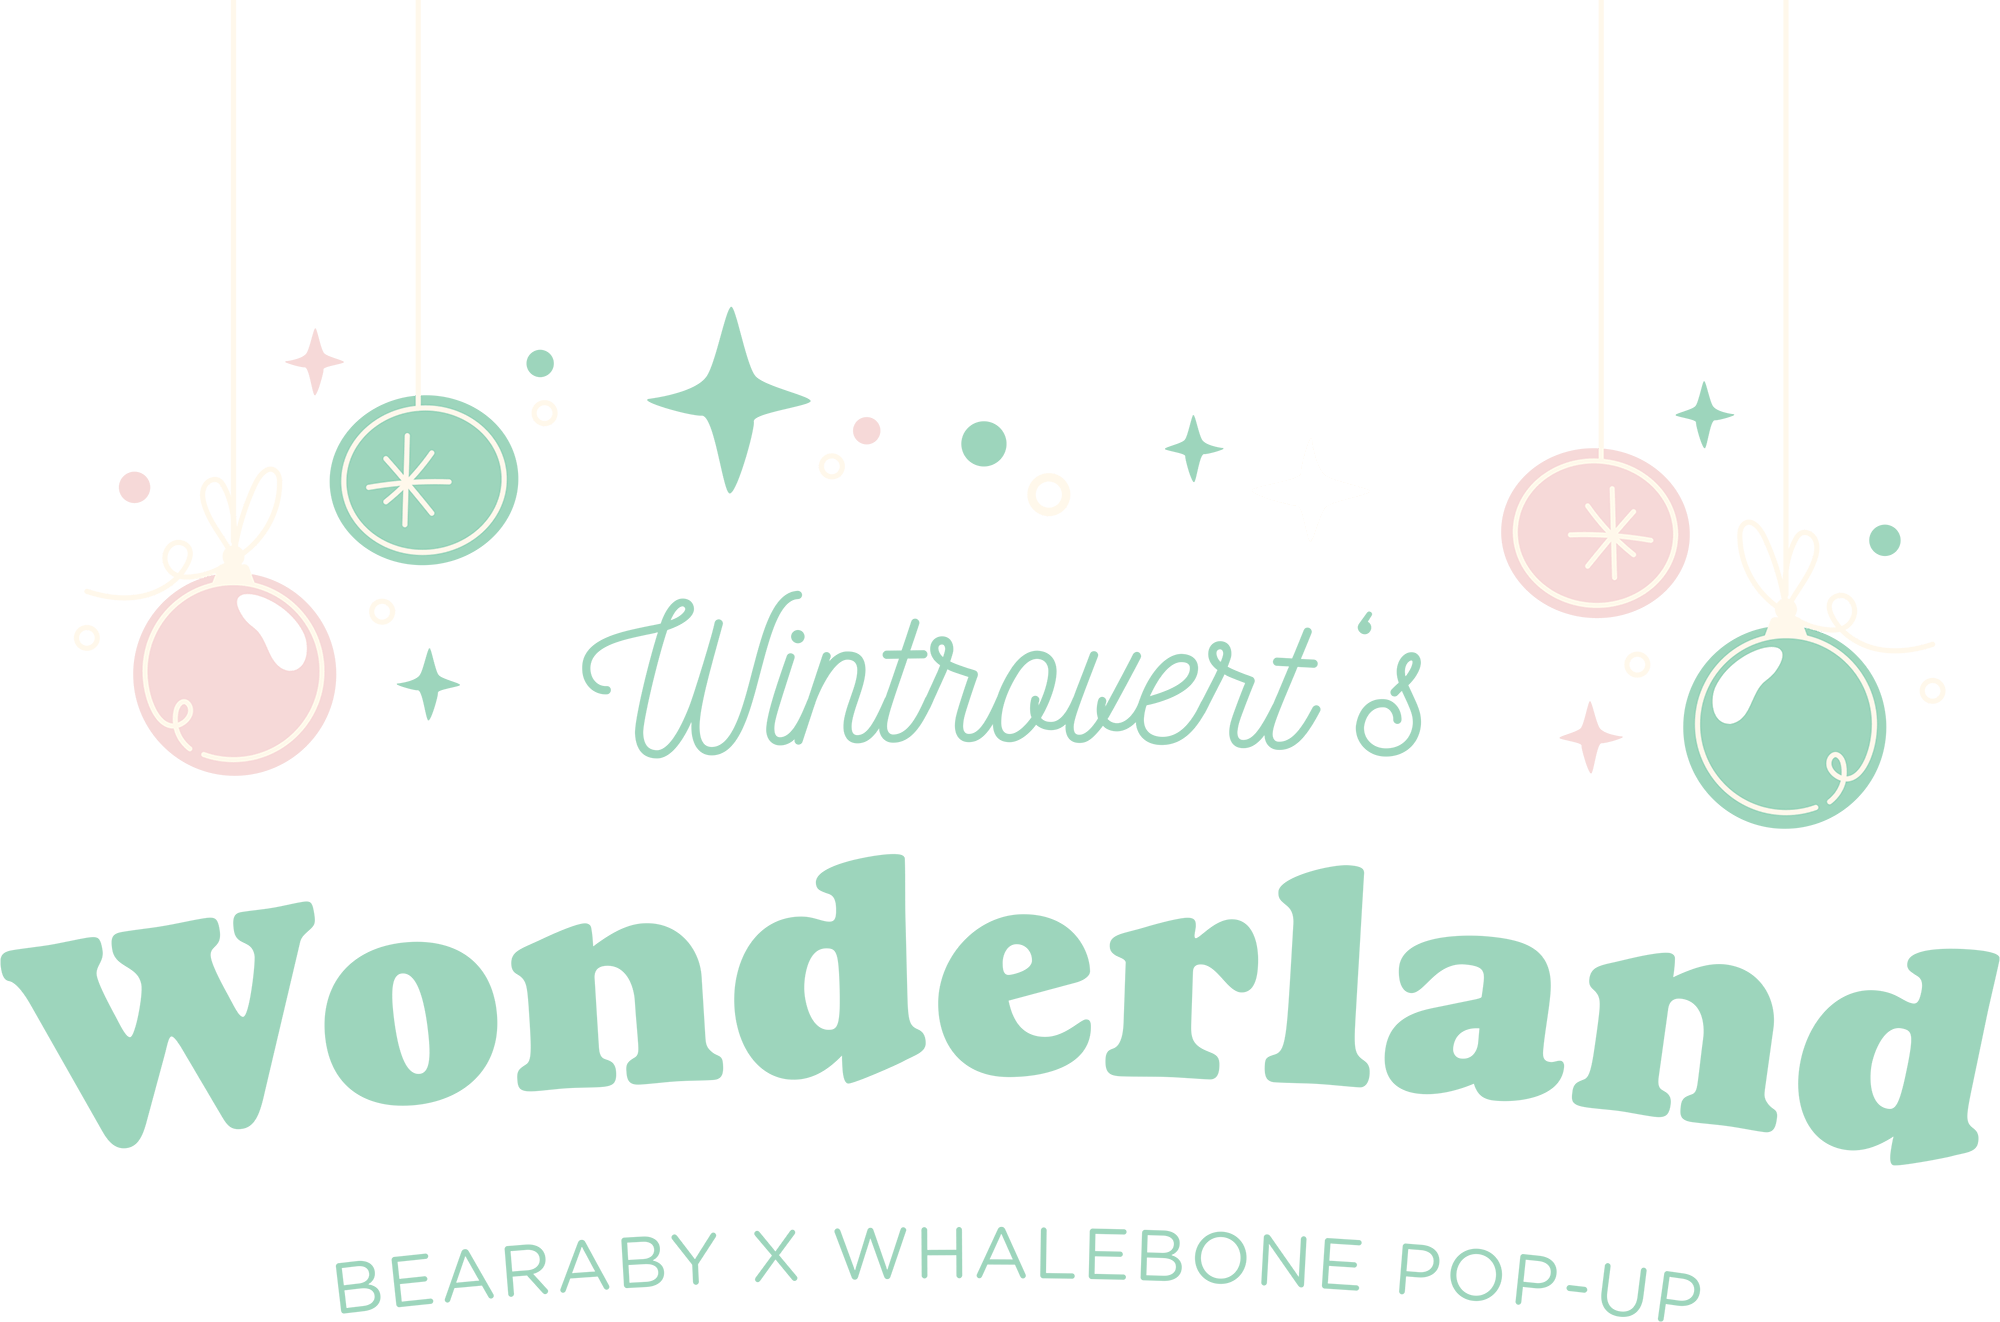 wintrovert's wonderland bearaby x whalebone pop-up at the bleecker shop in new york city